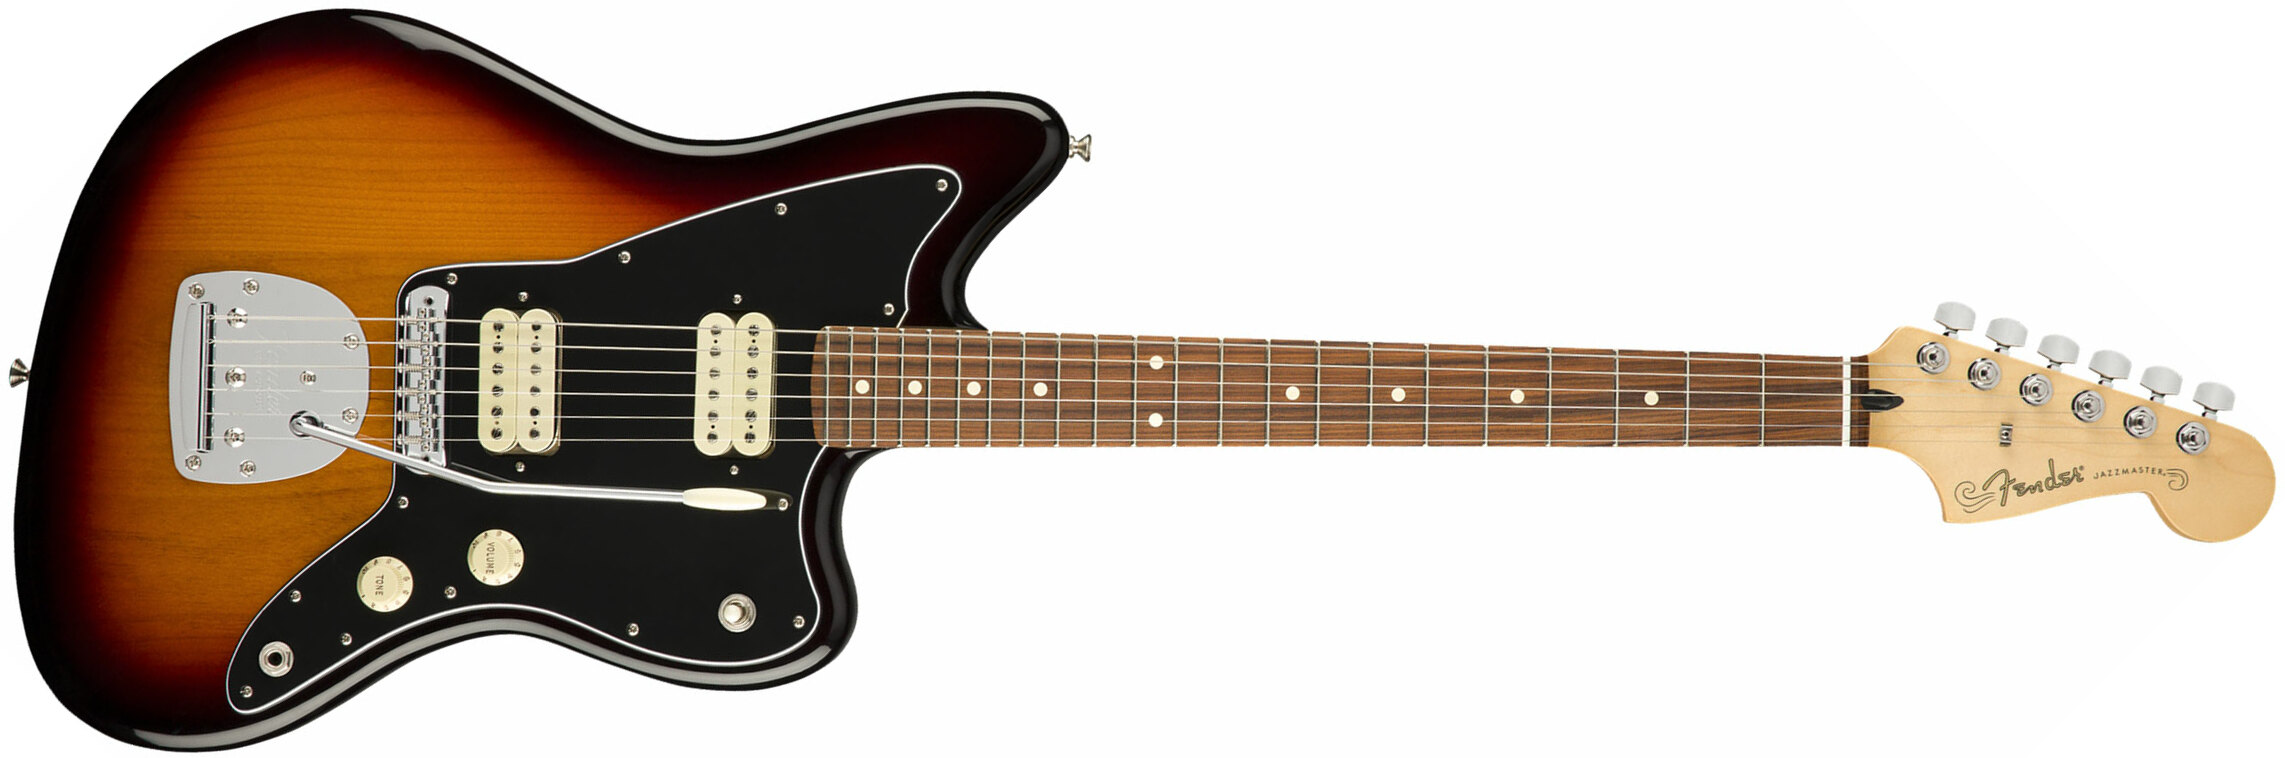 Fender Jazzmaster Player Mex Hh Pf - 3-color Sunburst - Retro rock electric guitar - Main picture